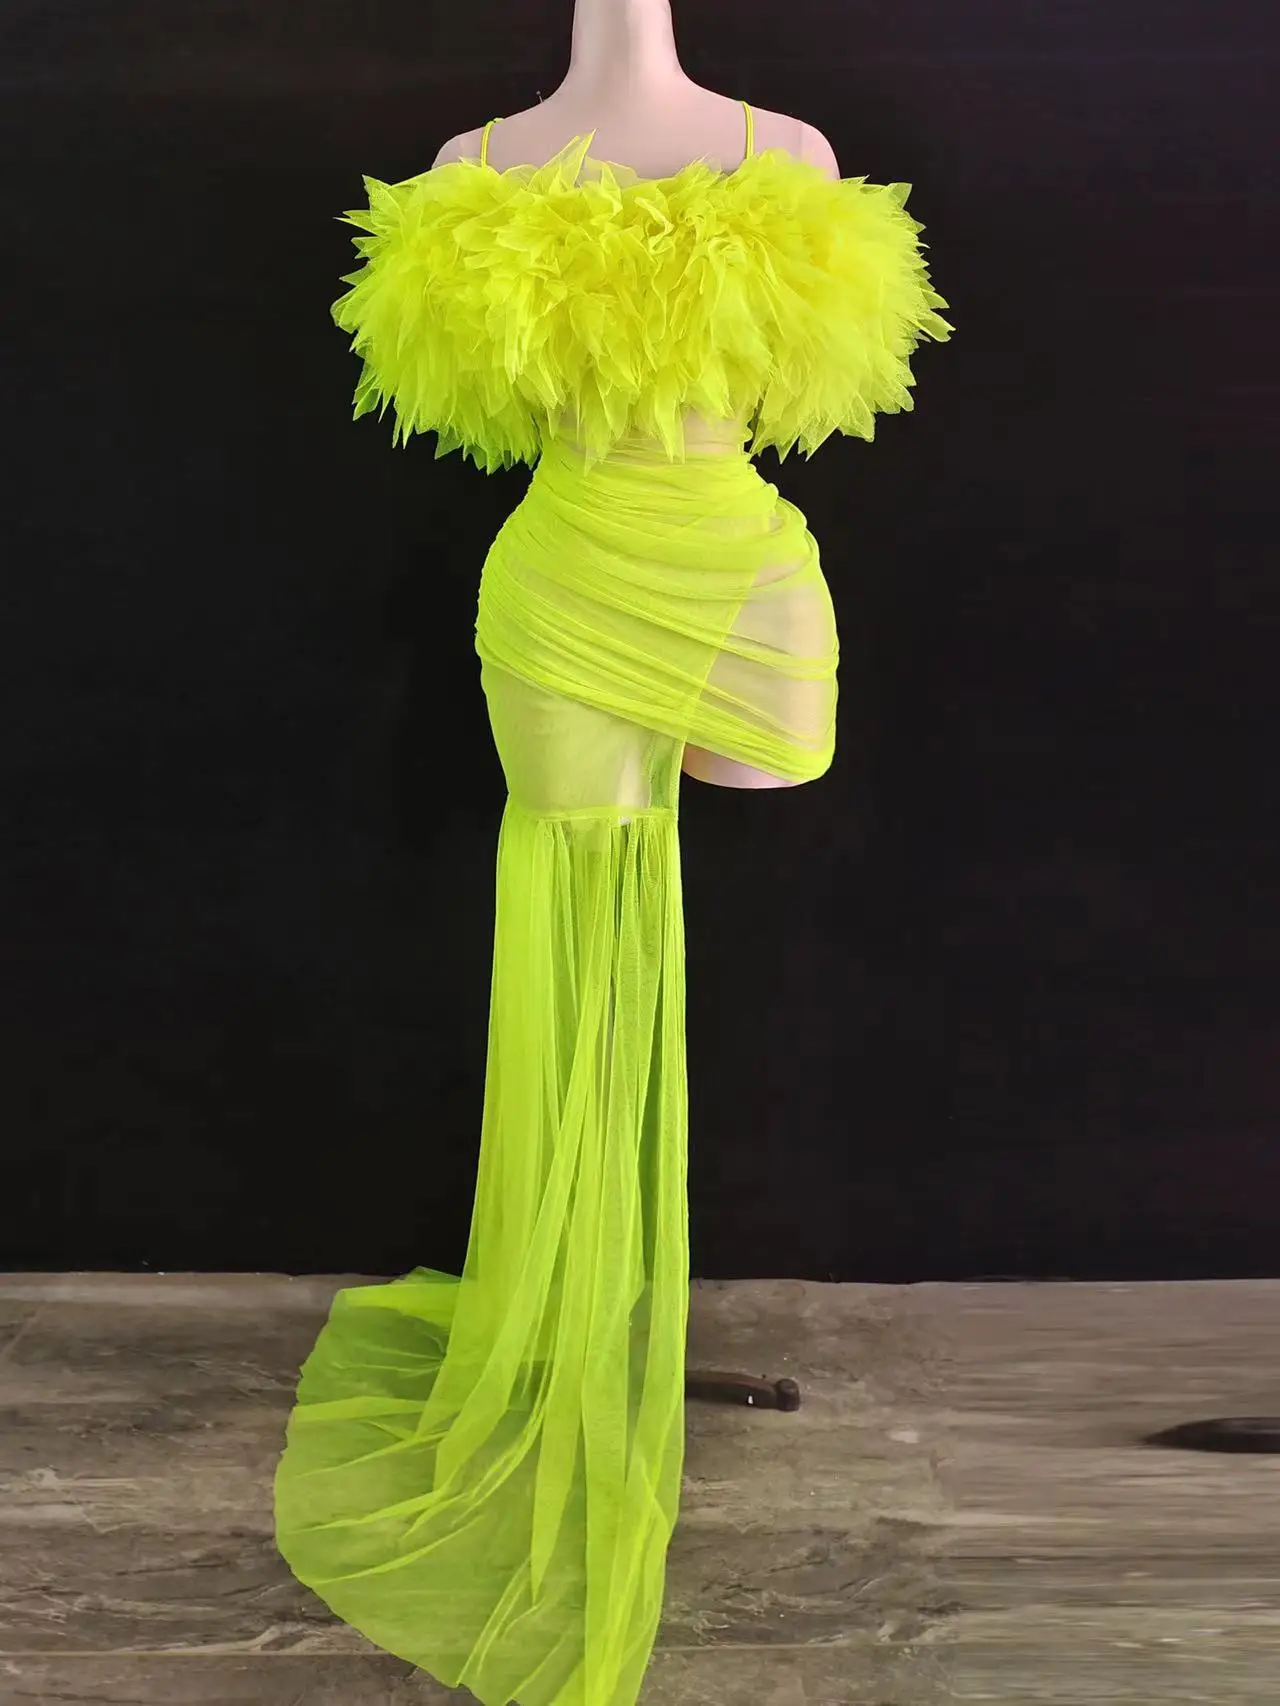 

Fluorescent Green Off Shoulder Transparent Trailing Dress Women Singer Concert Catwalk Party Dress Nightclub Show Stage Costume